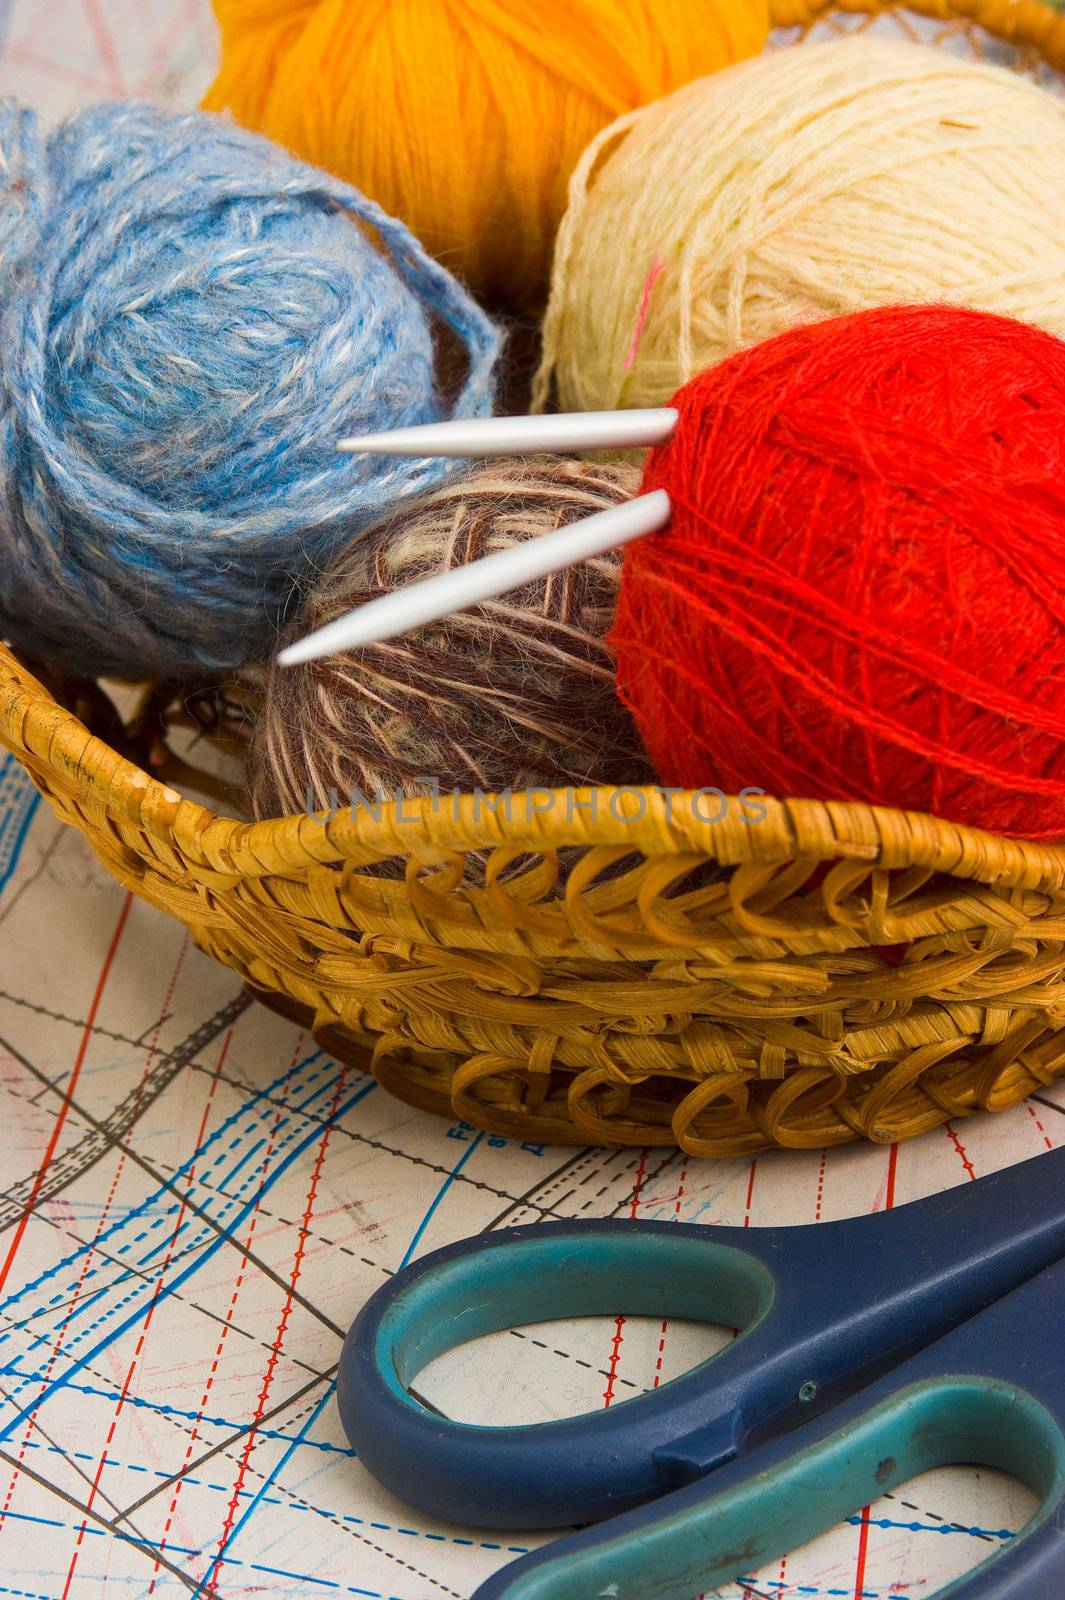 Balls with thread for knitting by oleg_zhukov